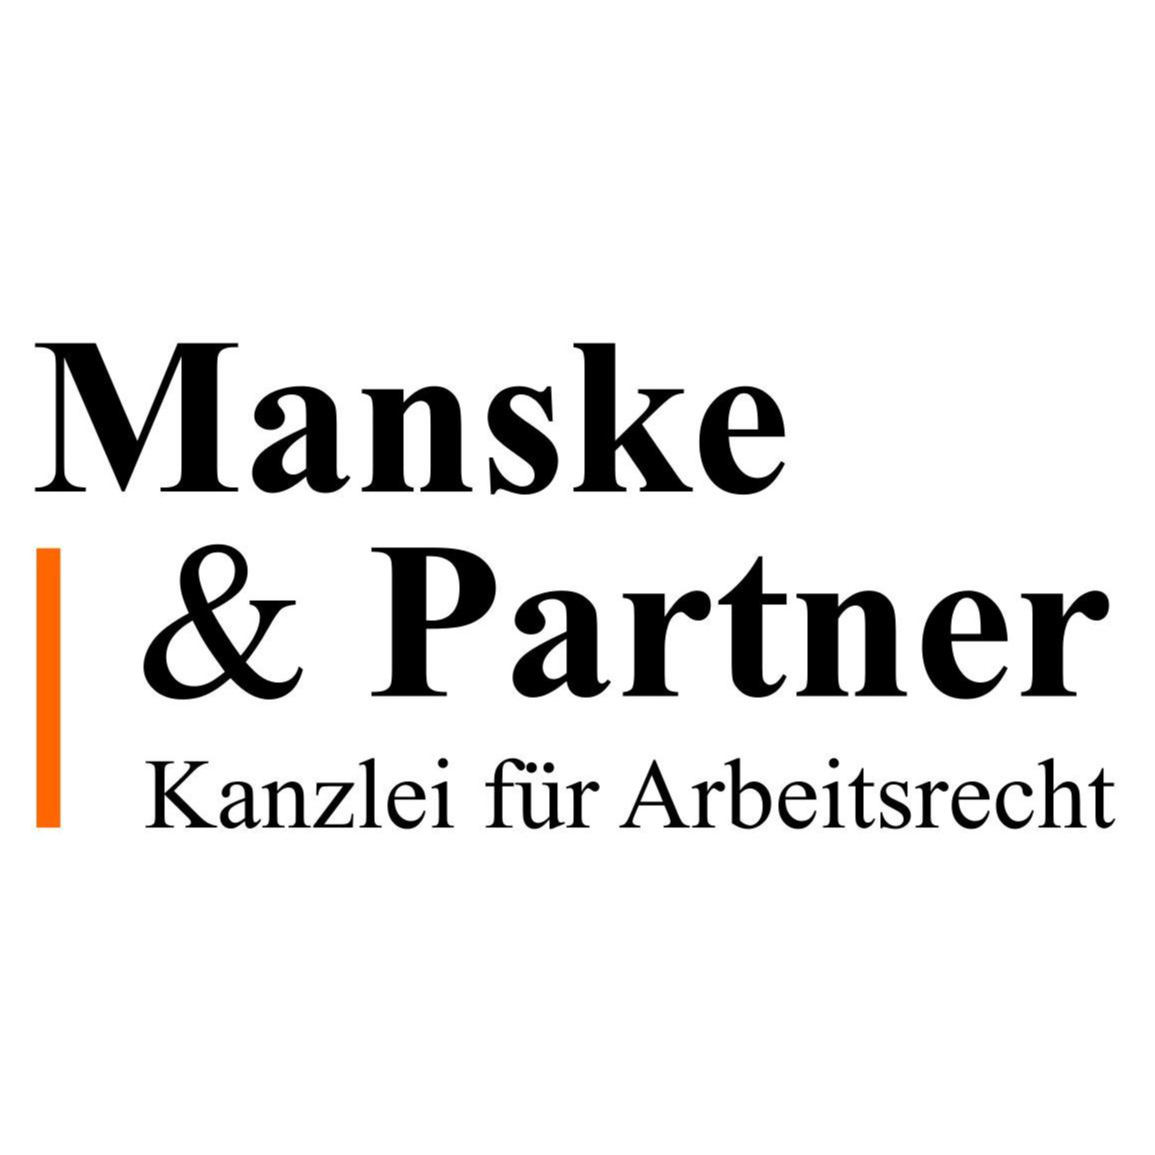 Manske & Partner Kanzlei für Arbeitsrecht in Nürnberg - Logo